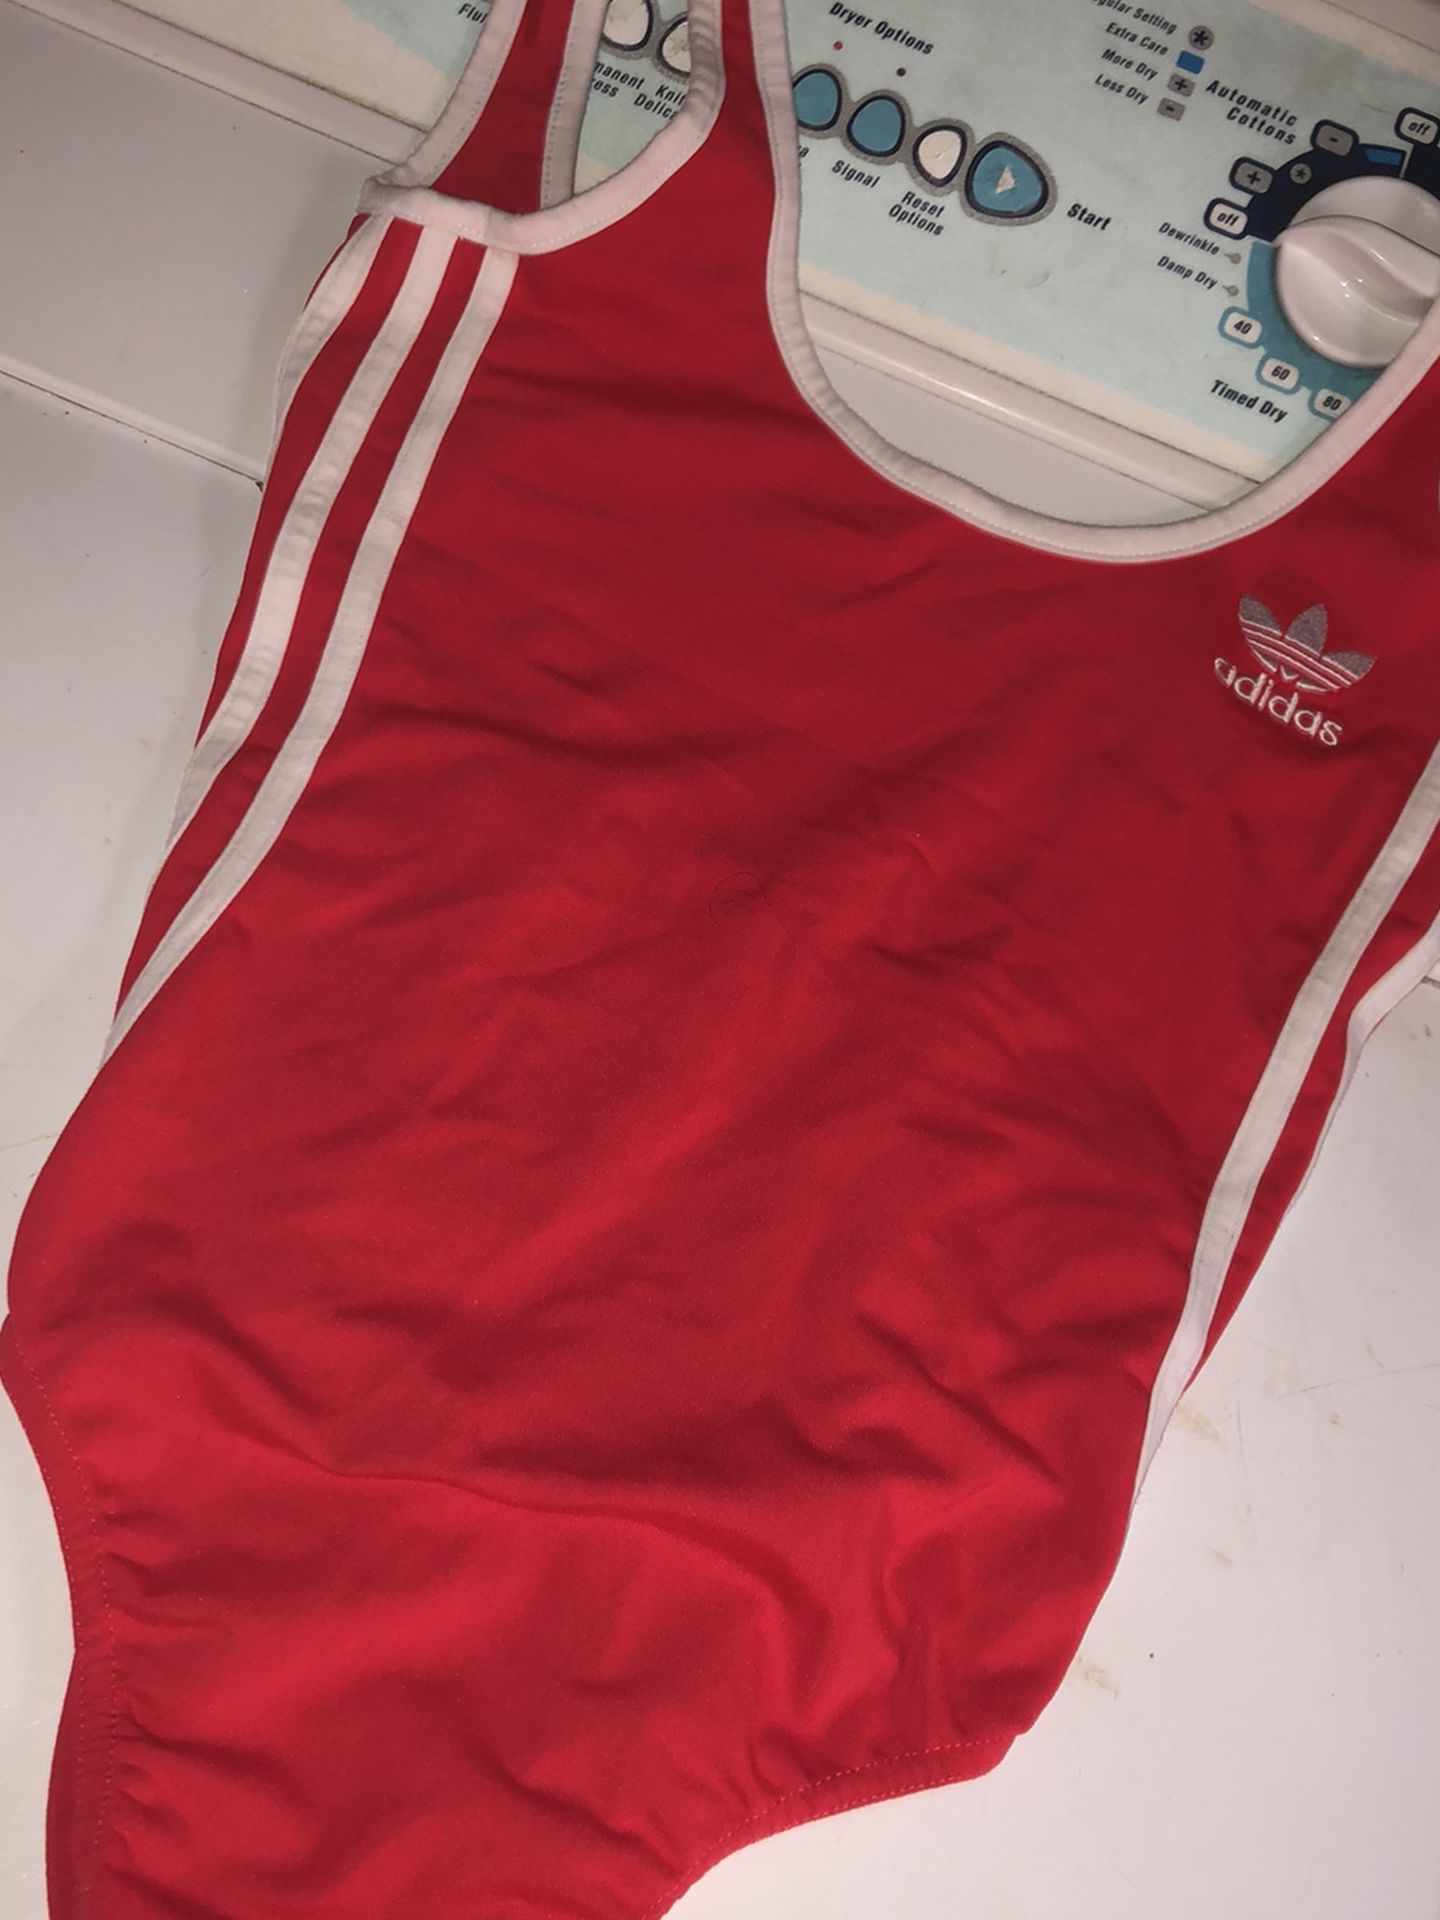 Adidas Originals Red Bodysuit Size Small